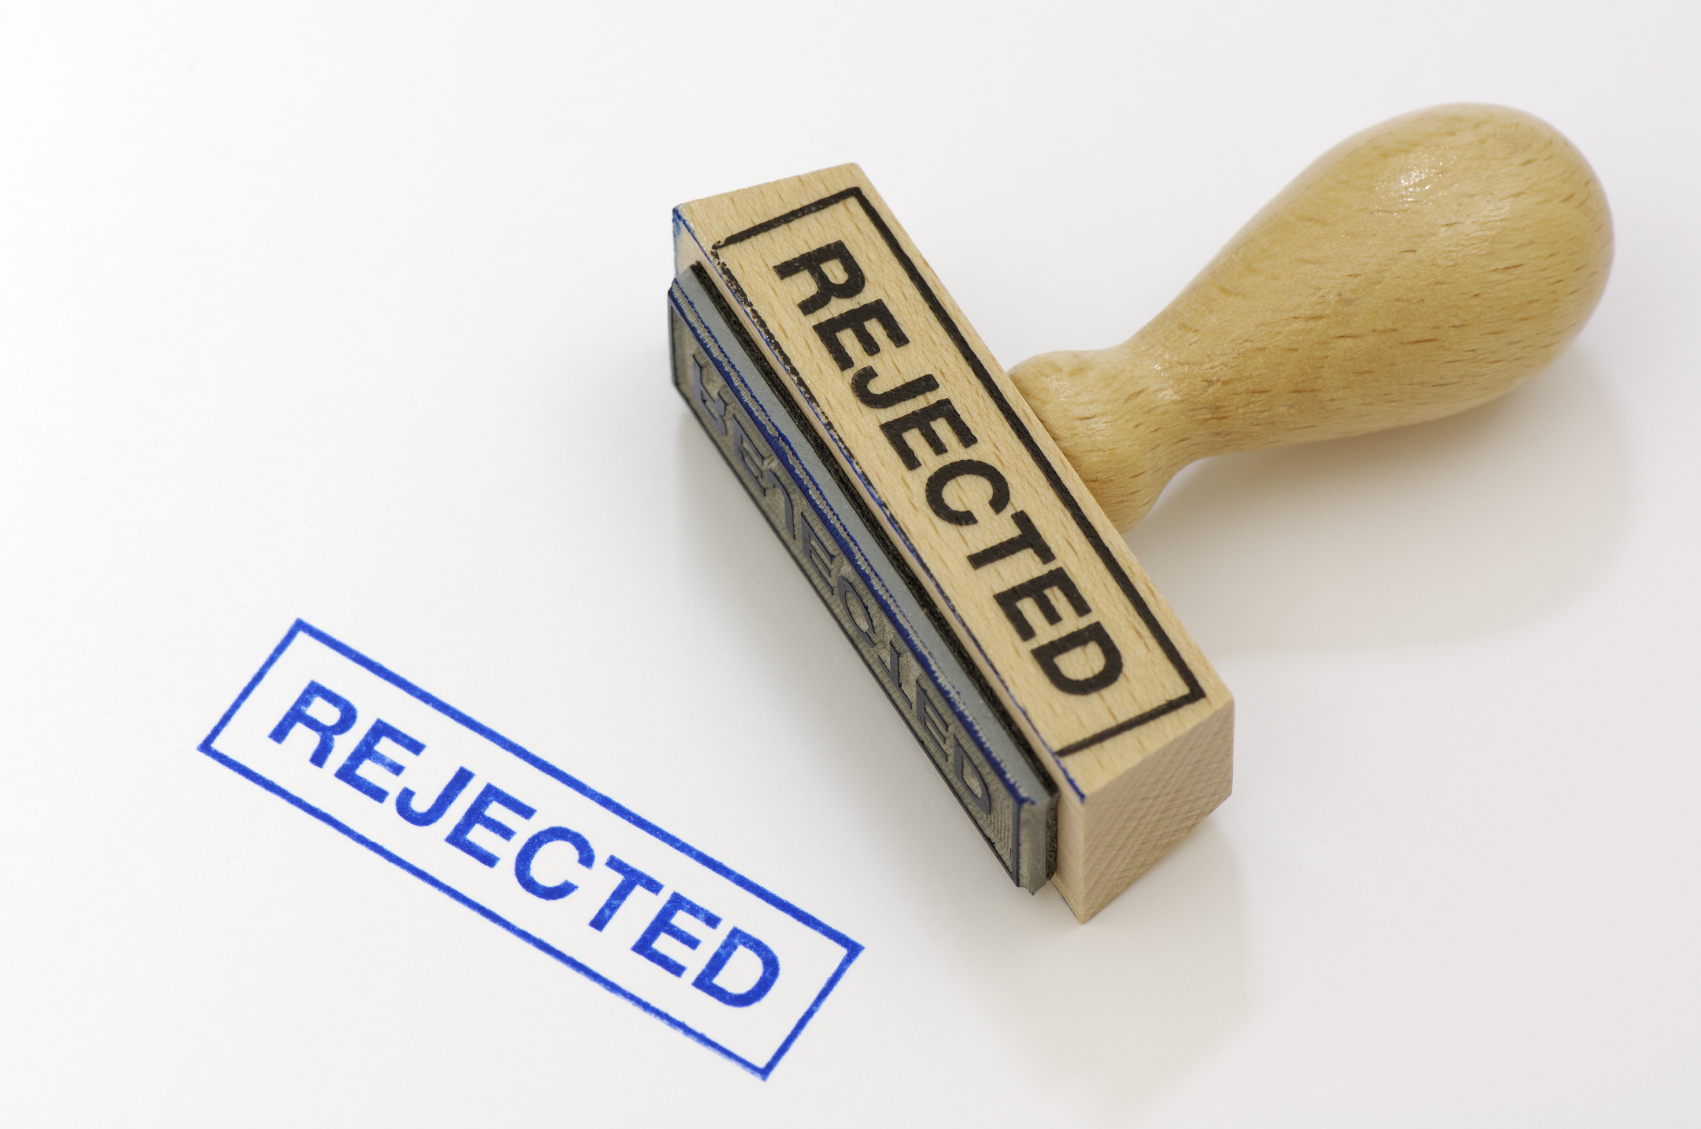 Rejection Stamp